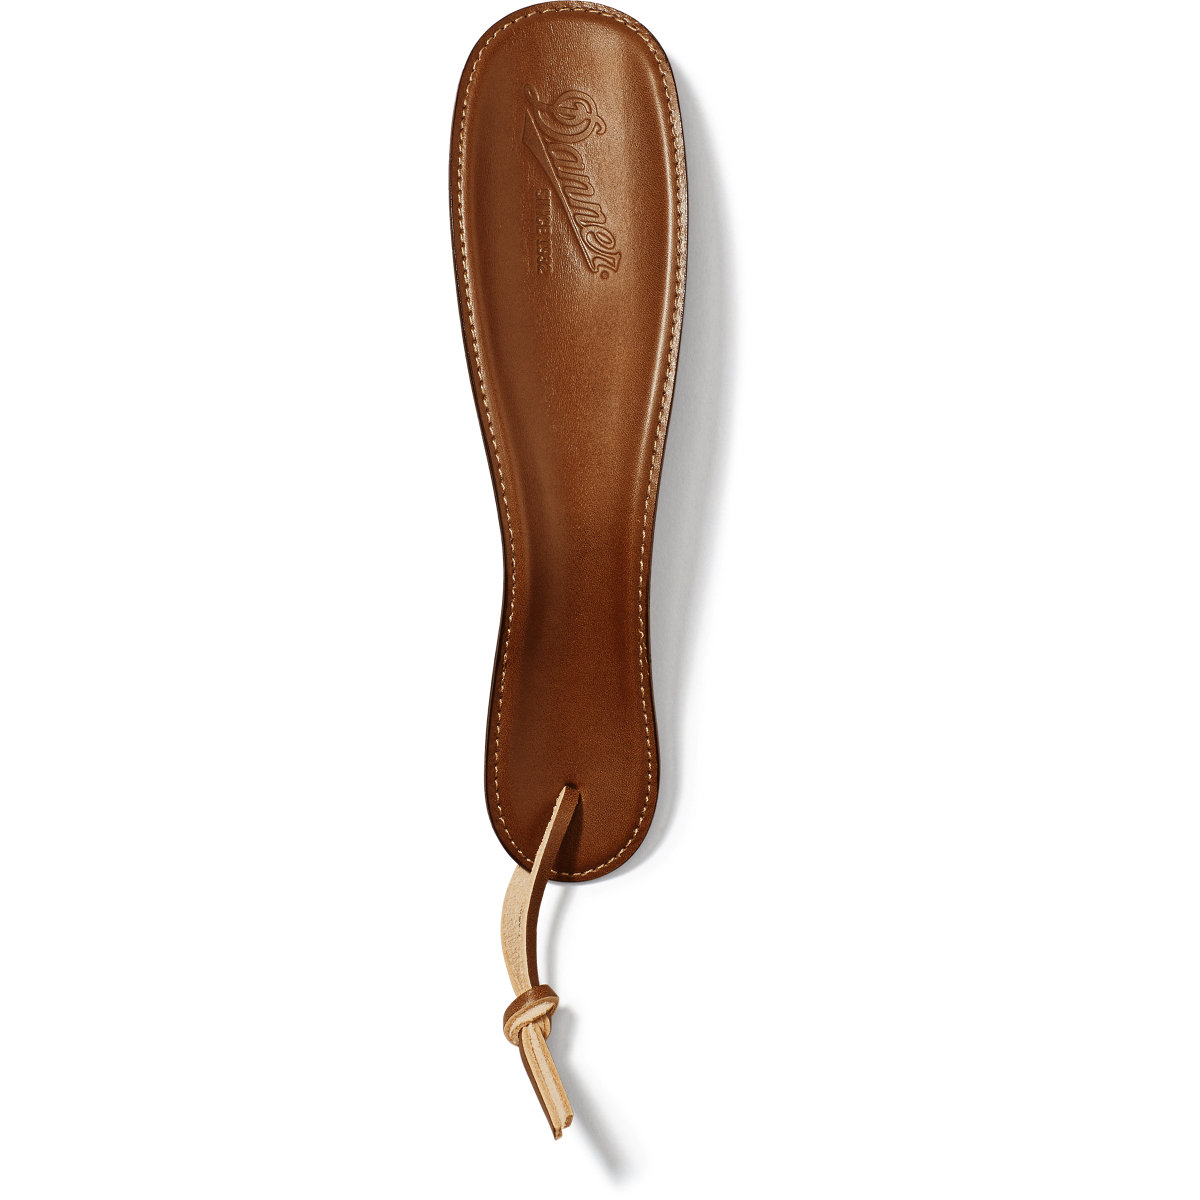 Danner Leather-Wrapped Shoe Horn with Hang Loop - Dark Brown